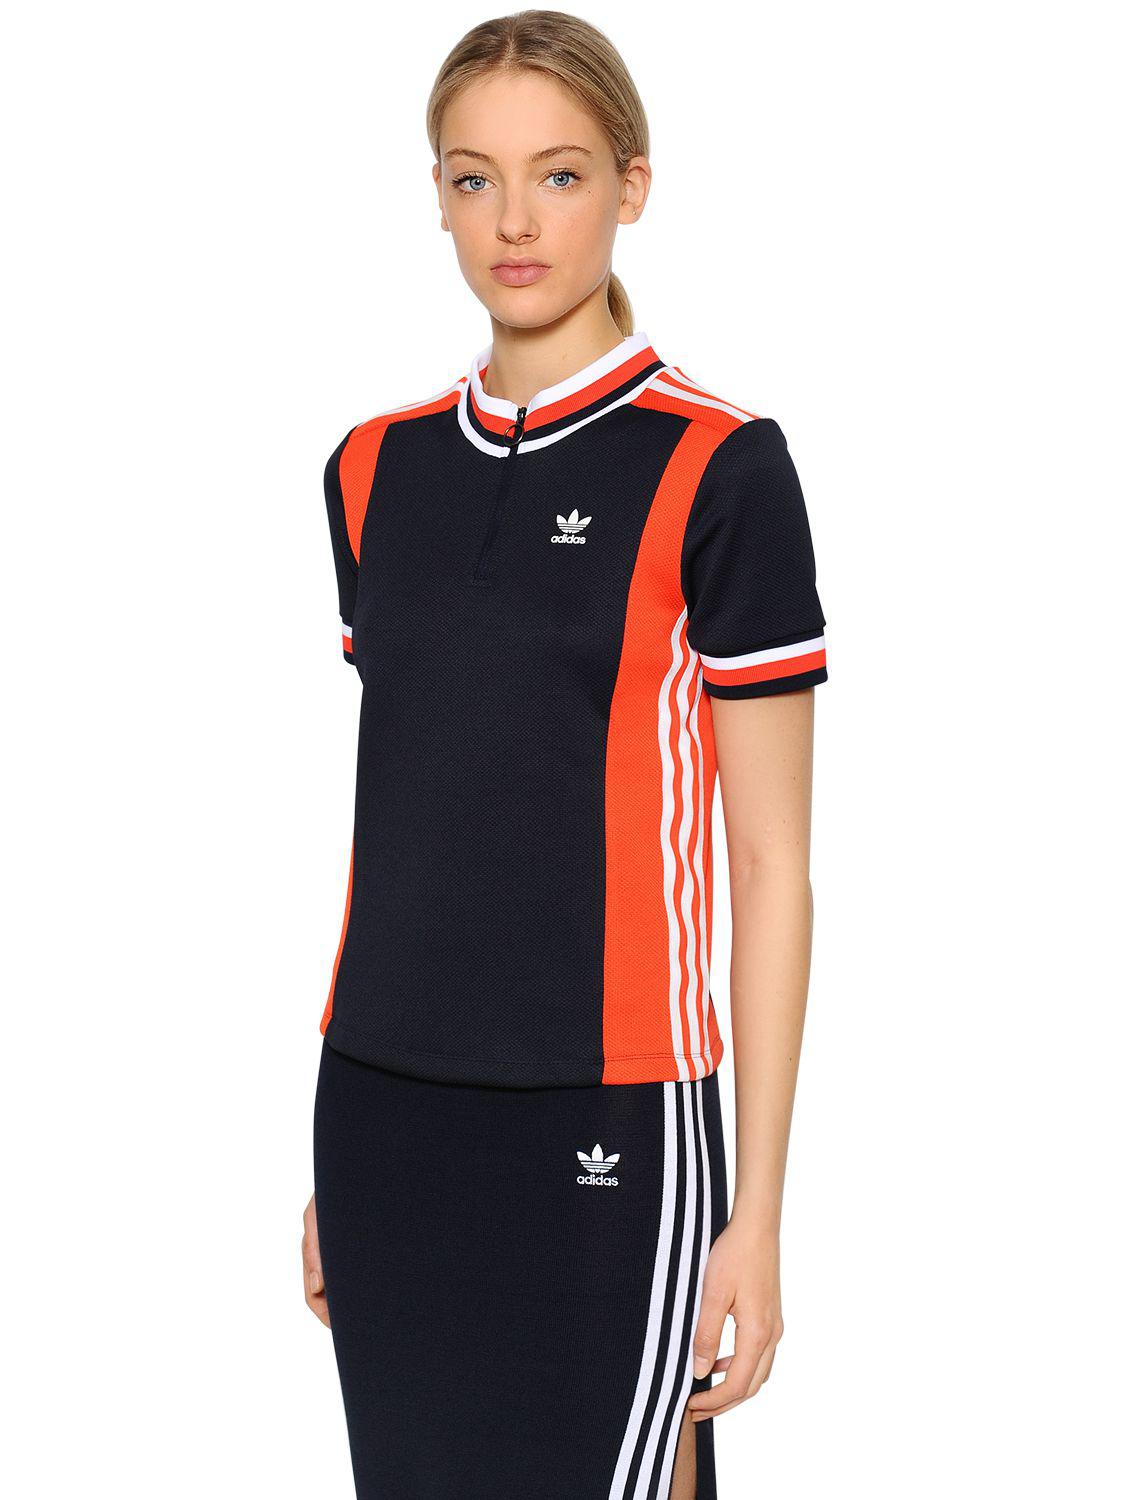 adidas Originals Osaka Archive Jersey T-shirt in Navy/Orange (Blue) - Lyst